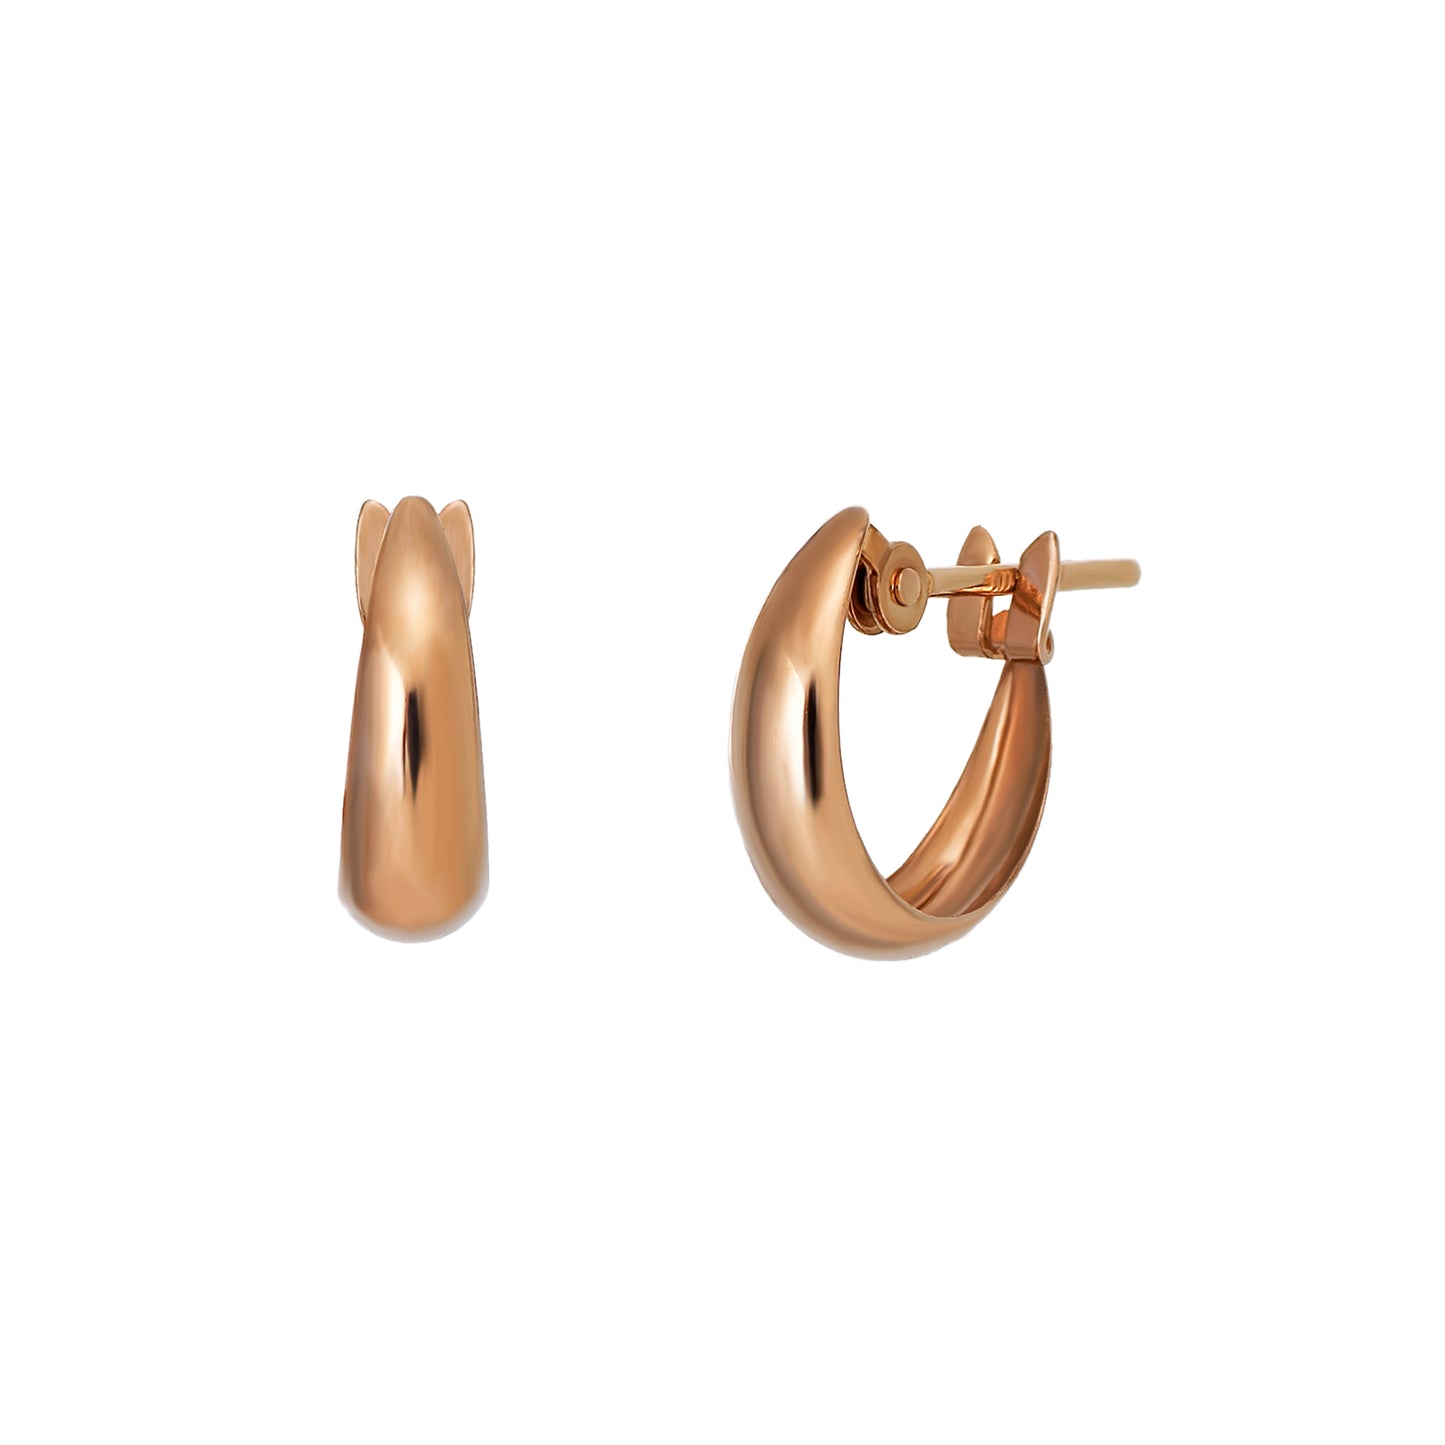 18K/10K Rose Gold Moon Design Hoop Mini Earrings - Product Image